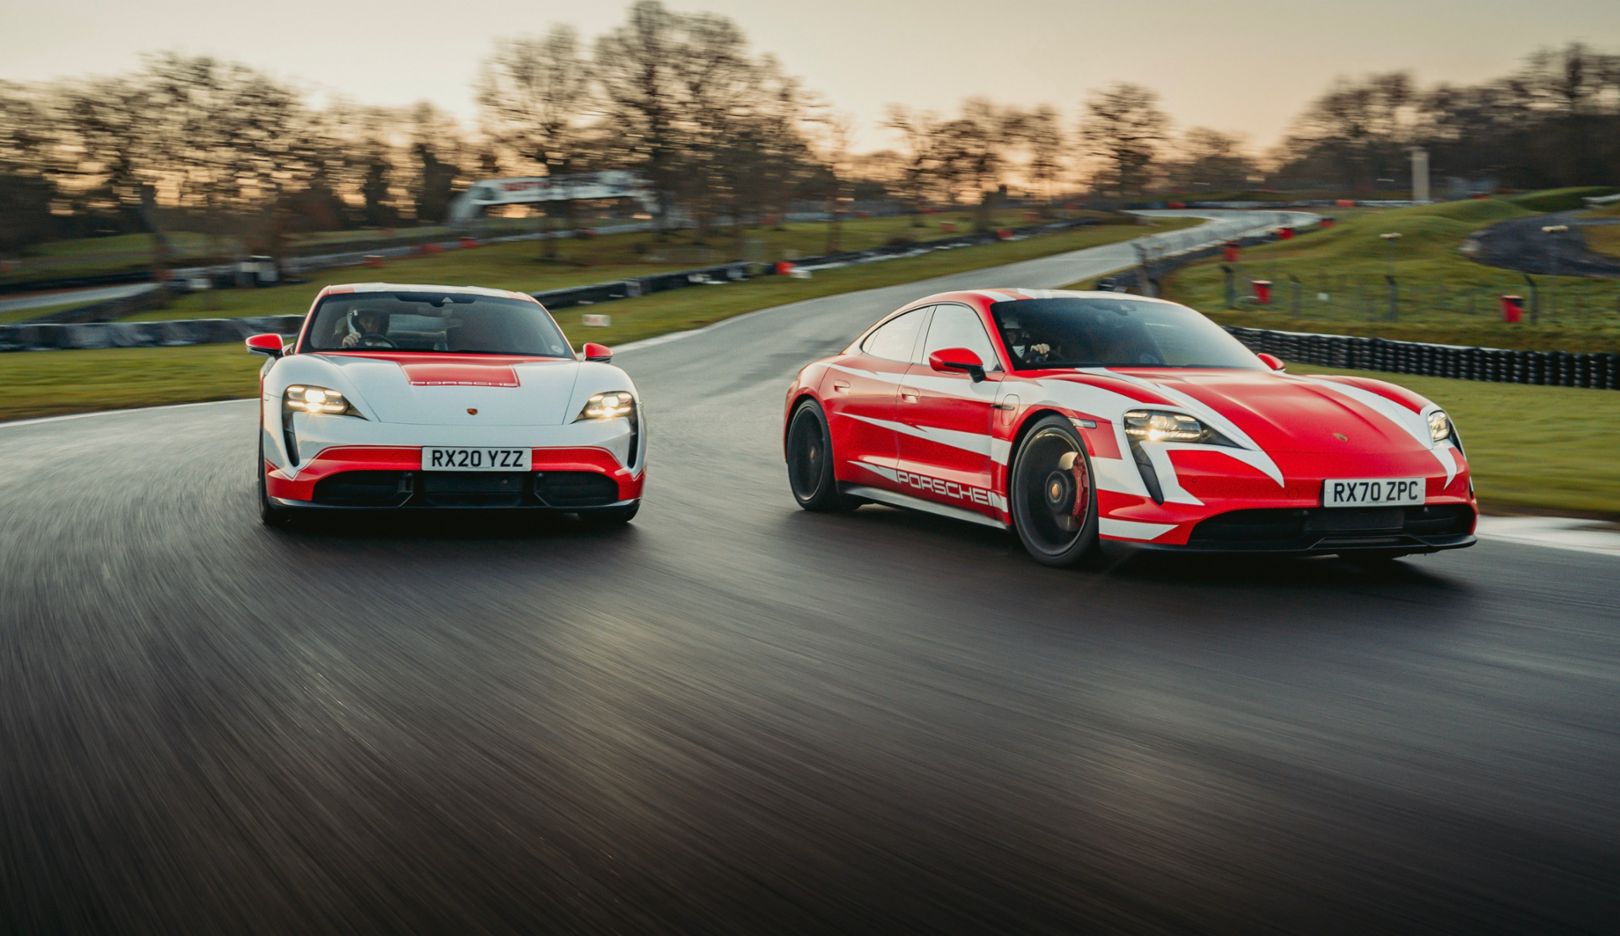 Porsche Taycan races into the record books